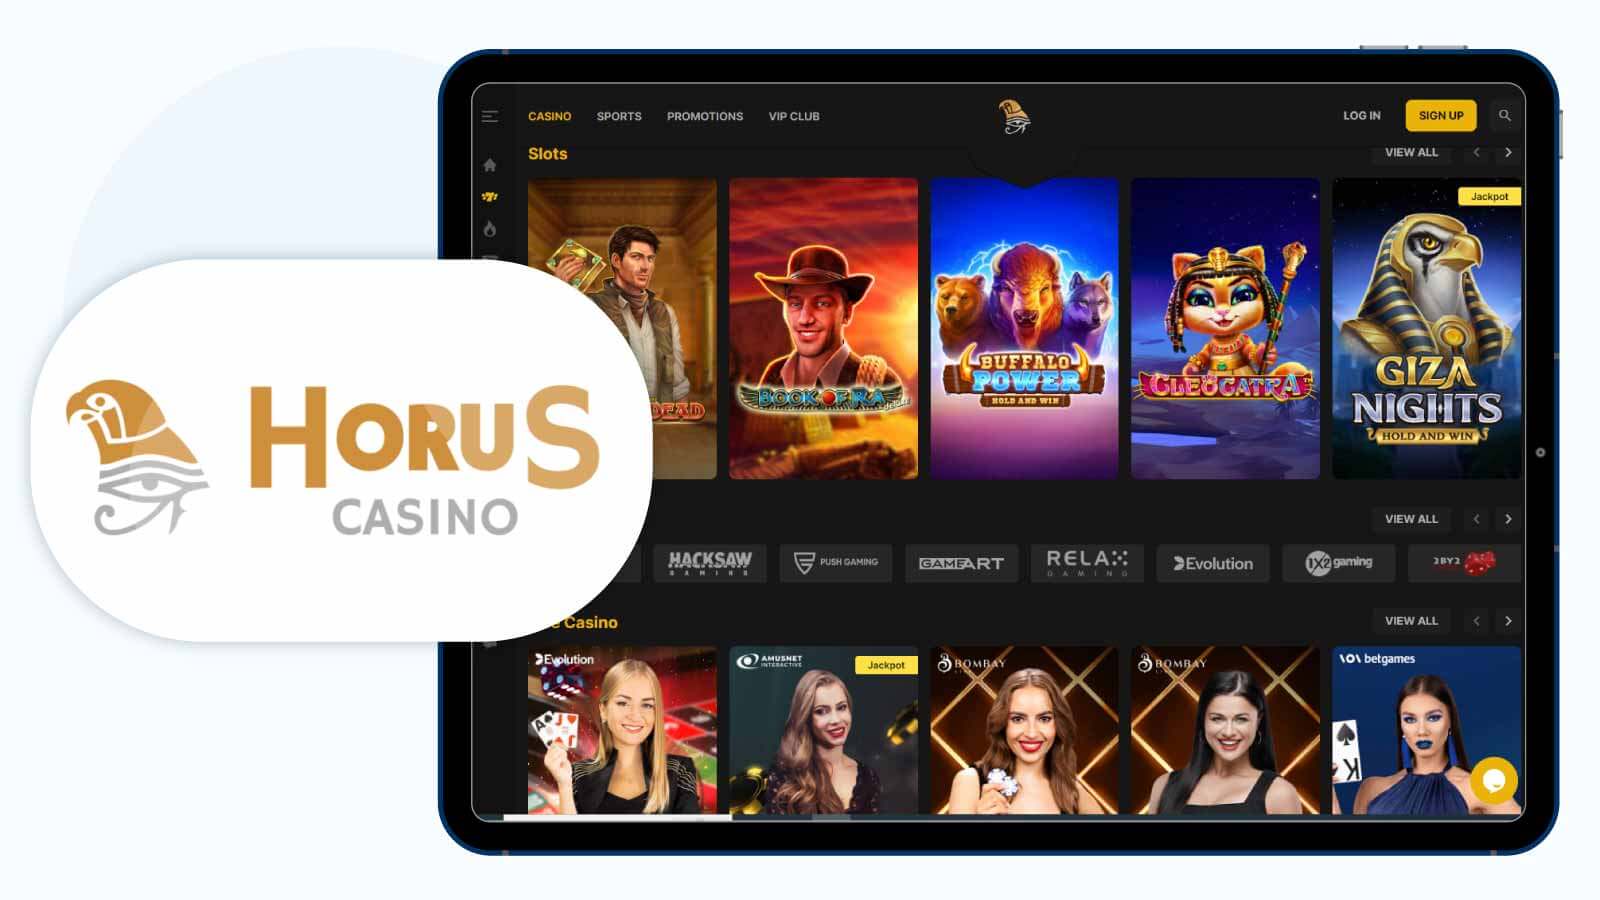 Horus Casino Best Minimum €5 Casino to Experience a Top No Wagering No Deposit Bonus